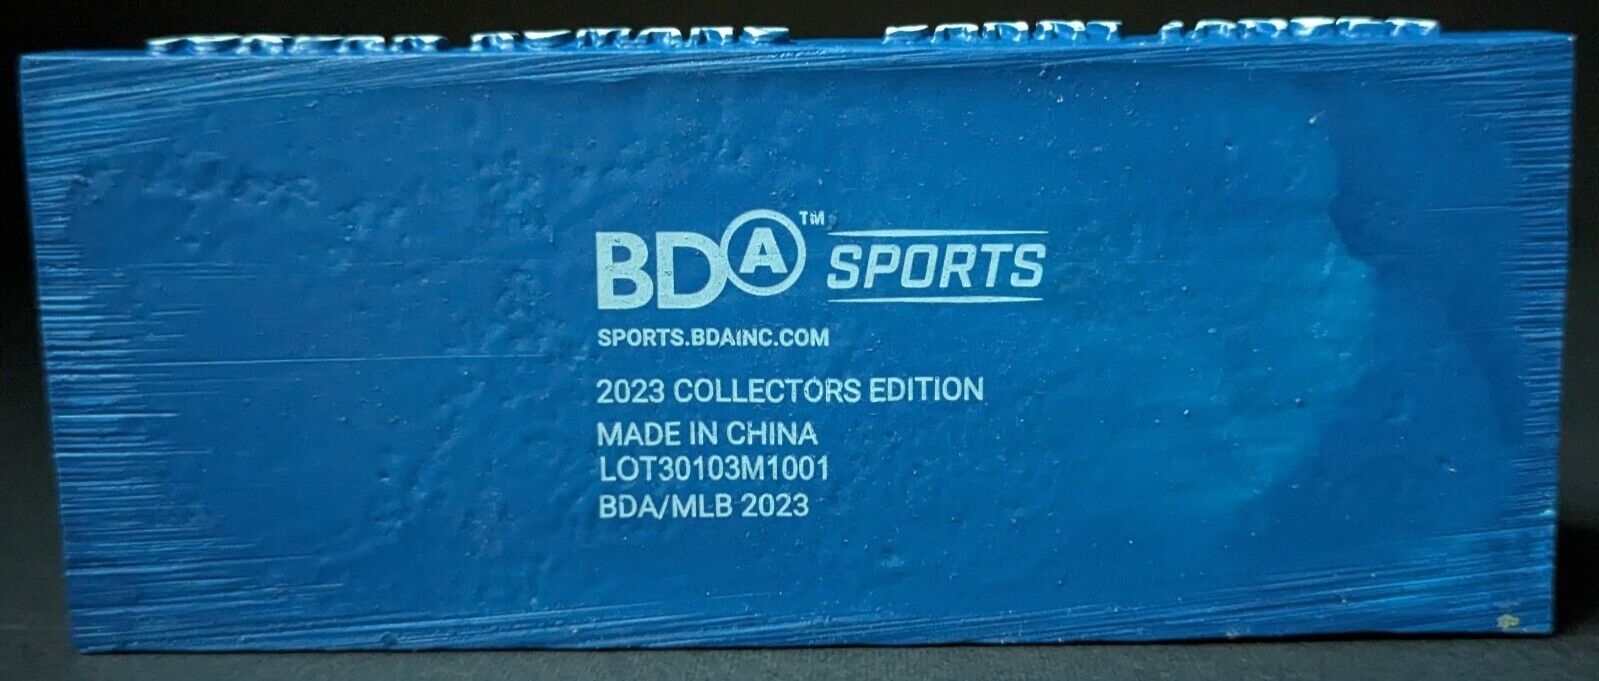 Jordan Romano Toronto Blue Jays Gamebreaker Bobblehead Officially Licensed by MLB